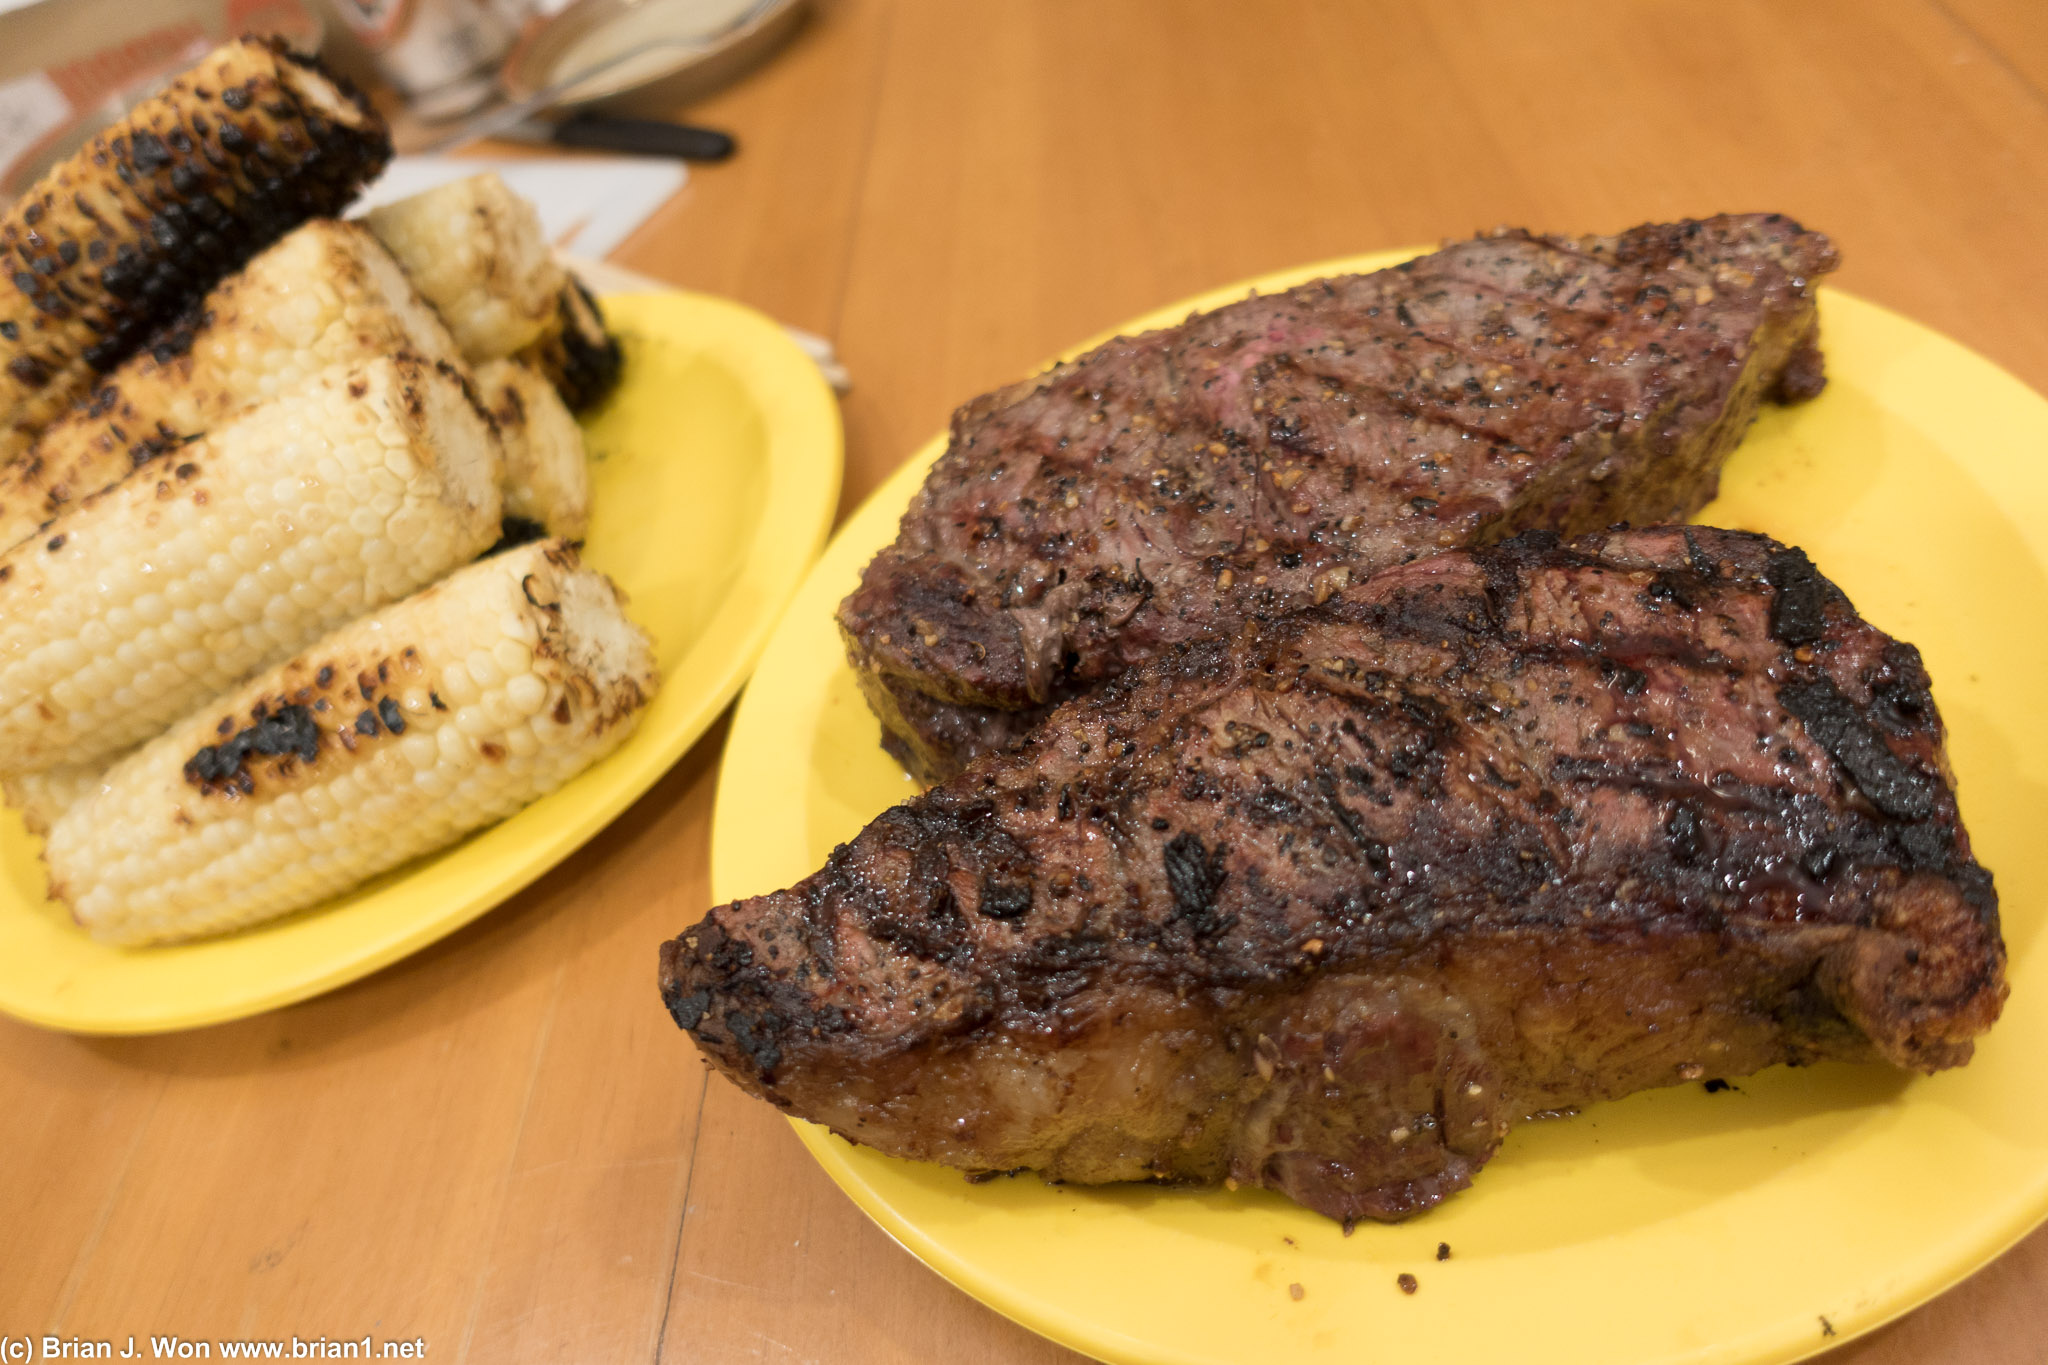 USDA prime steaks from Costco for dinner.